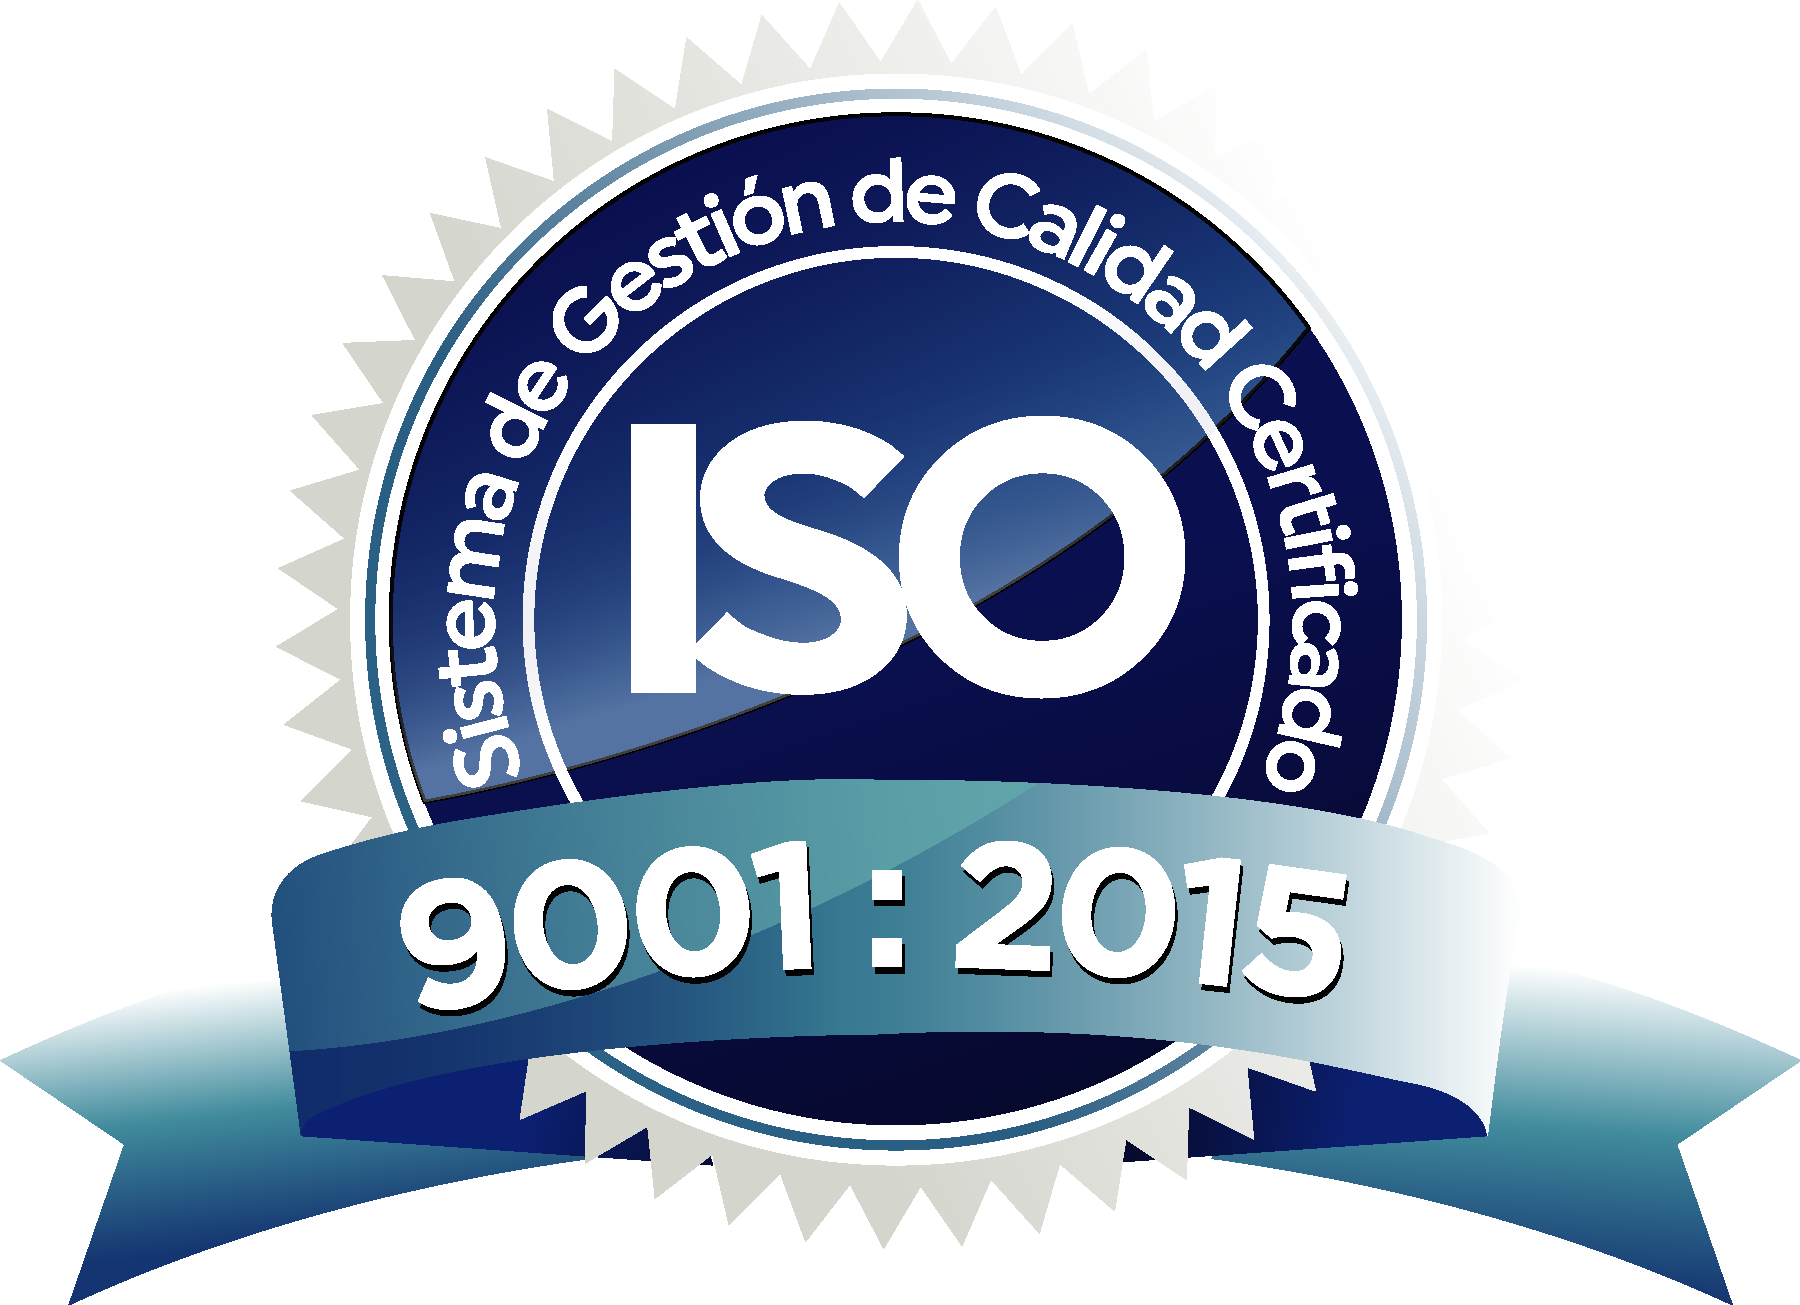 Стандарт качества iso 9001 2015. Международные стандарты качества ISO 9001 2015. Standard ISO 9001. Сертификат ISO 9001:2015 лого. Международный стандарт ISO 9001.